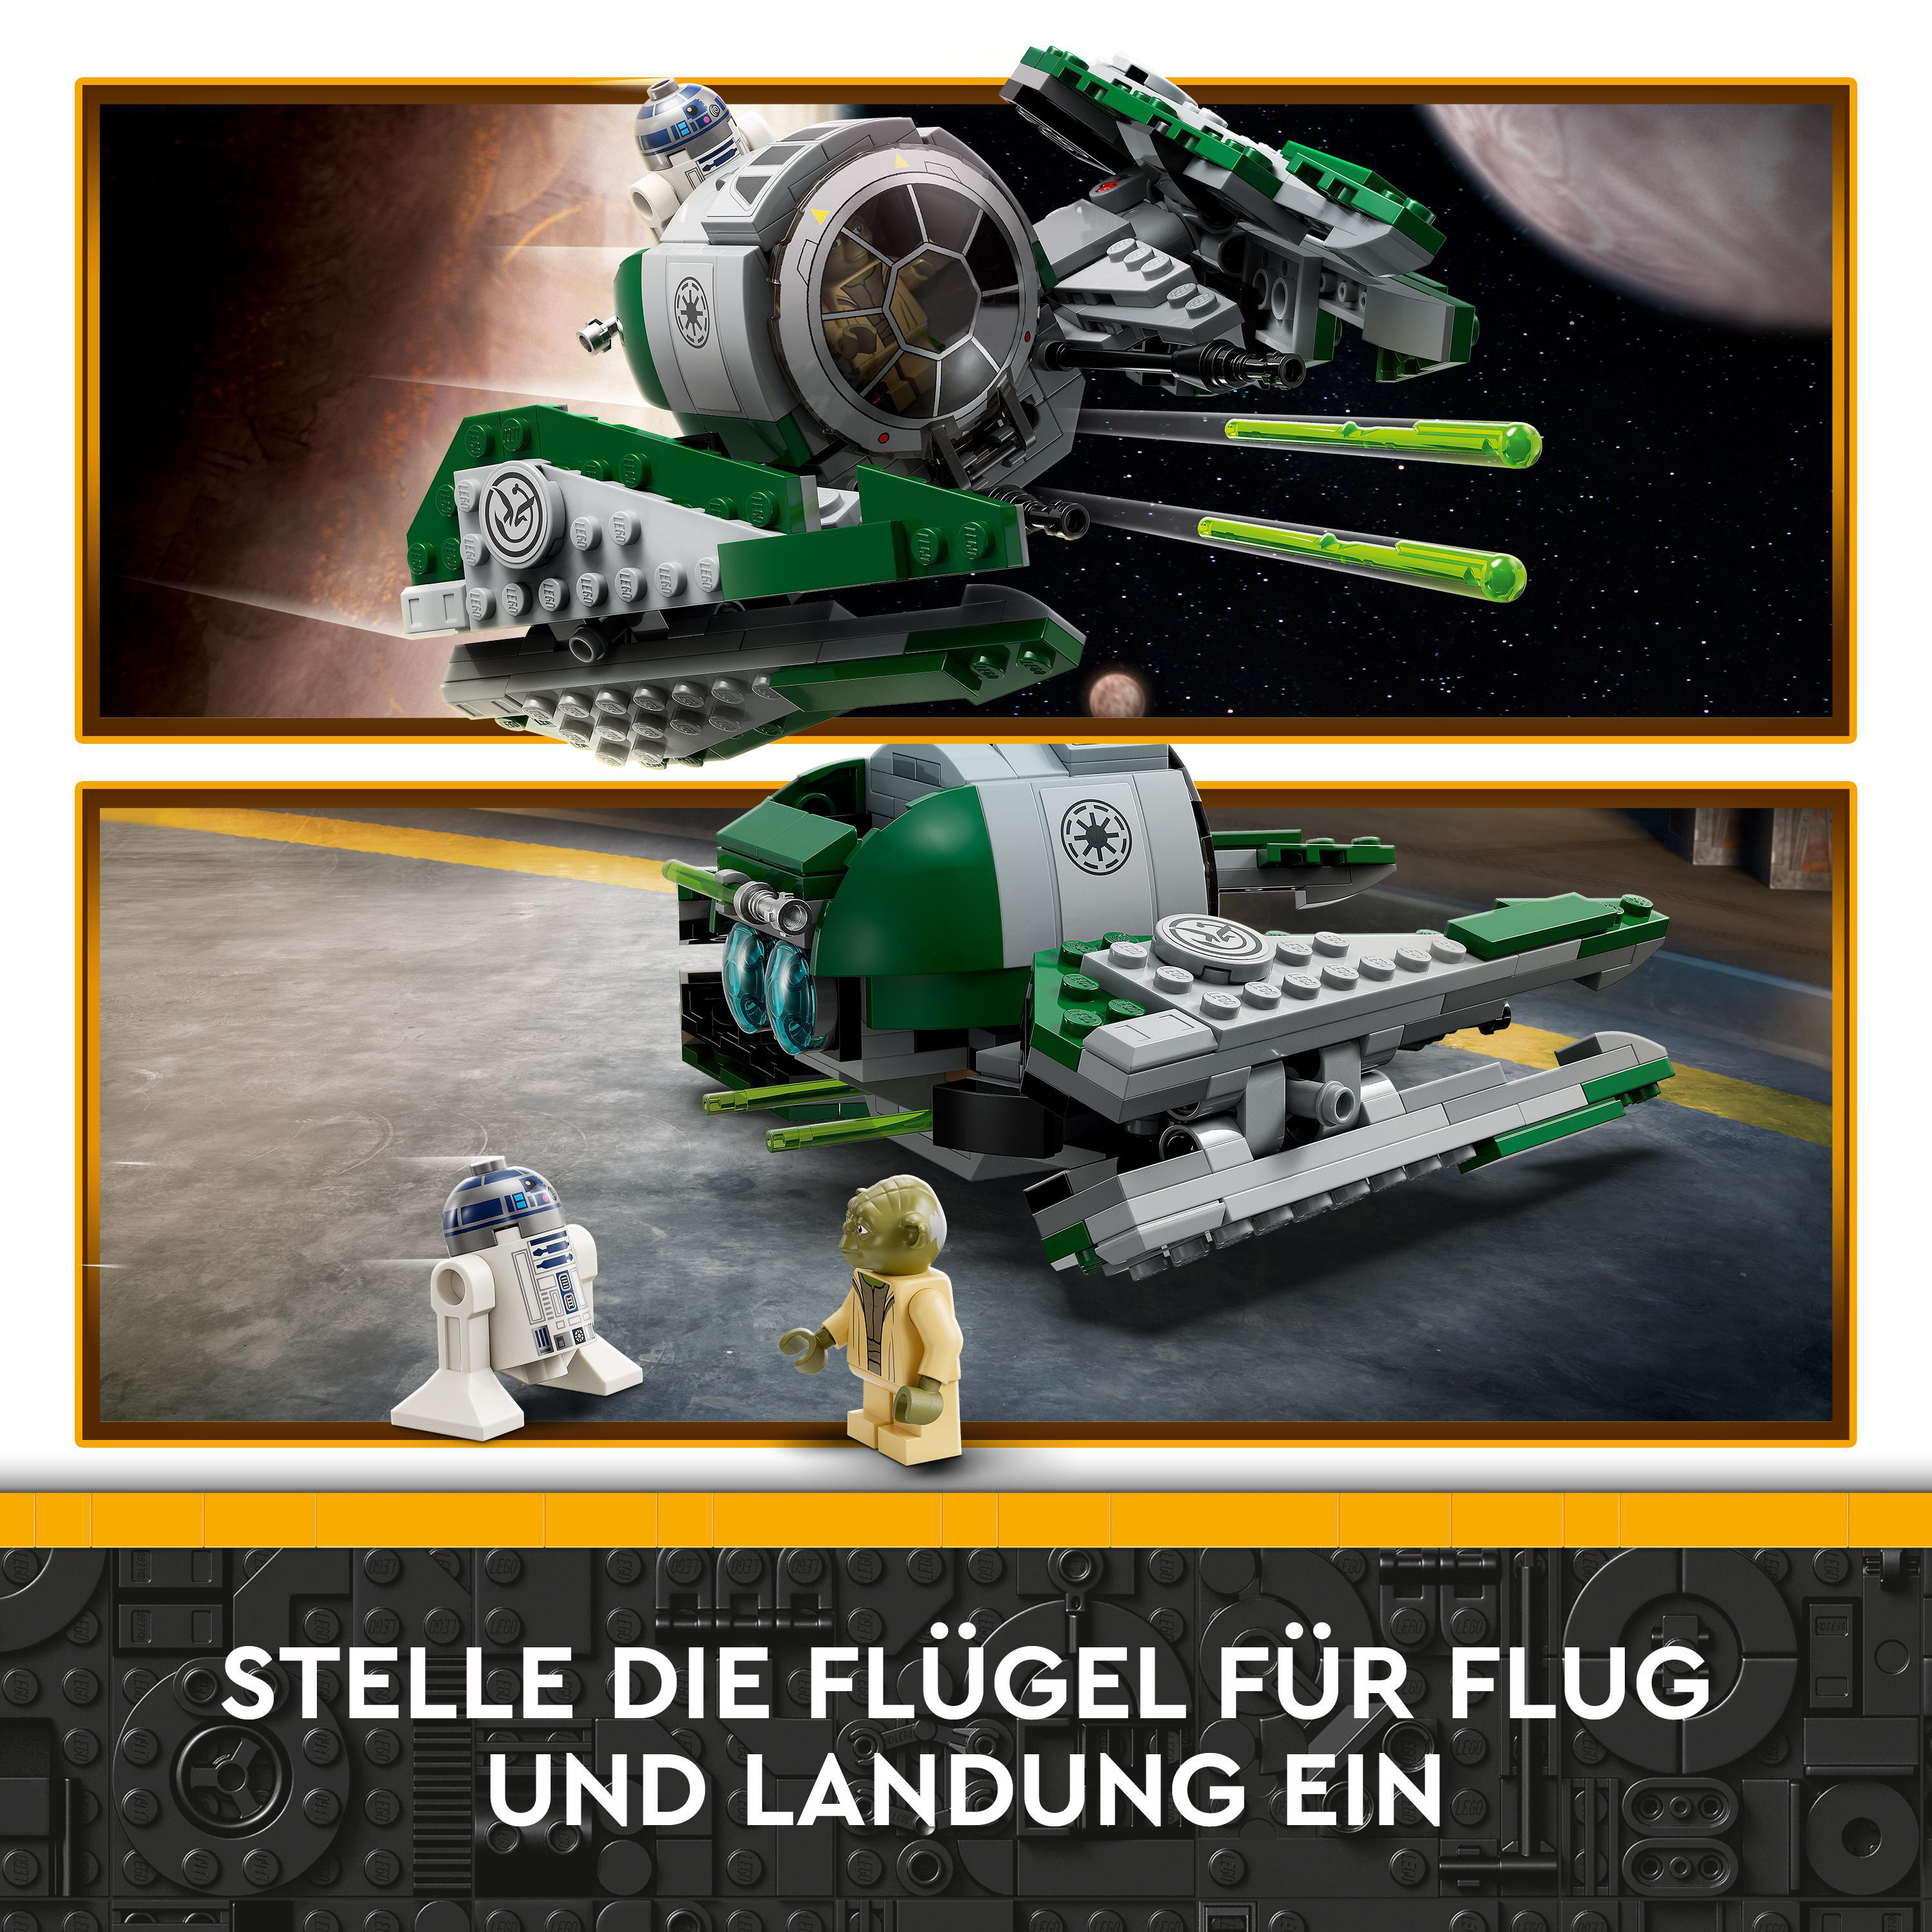 75360 Star Starfighter Mehrfarbig Bausatz, Yoda\'s Wars LEGO Jedi